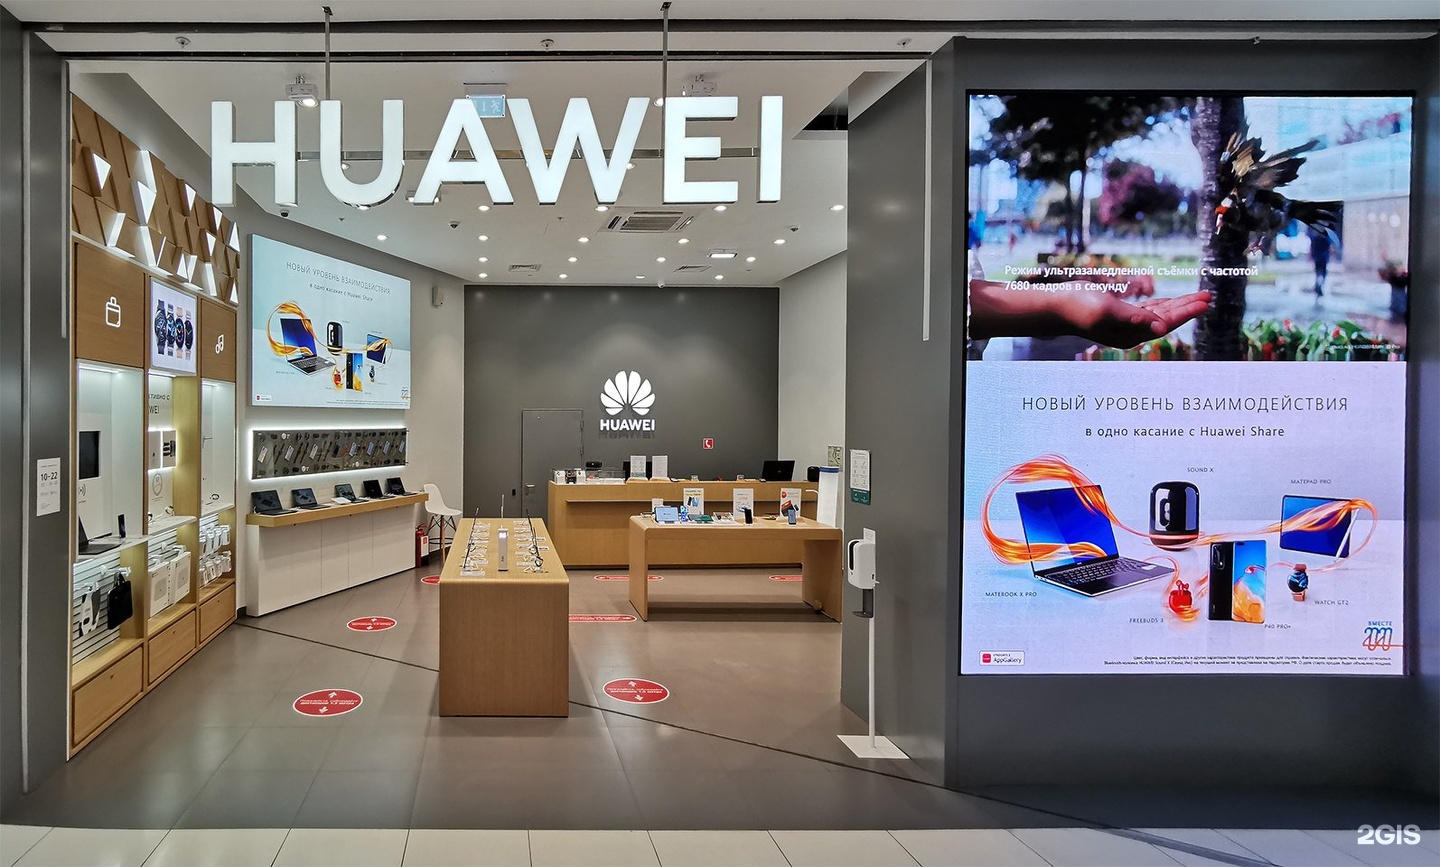 Купить huawei в магазине. Huawei магазин. Фирменный магазин Huawei. Huawei Москва. Электроника Huawei.